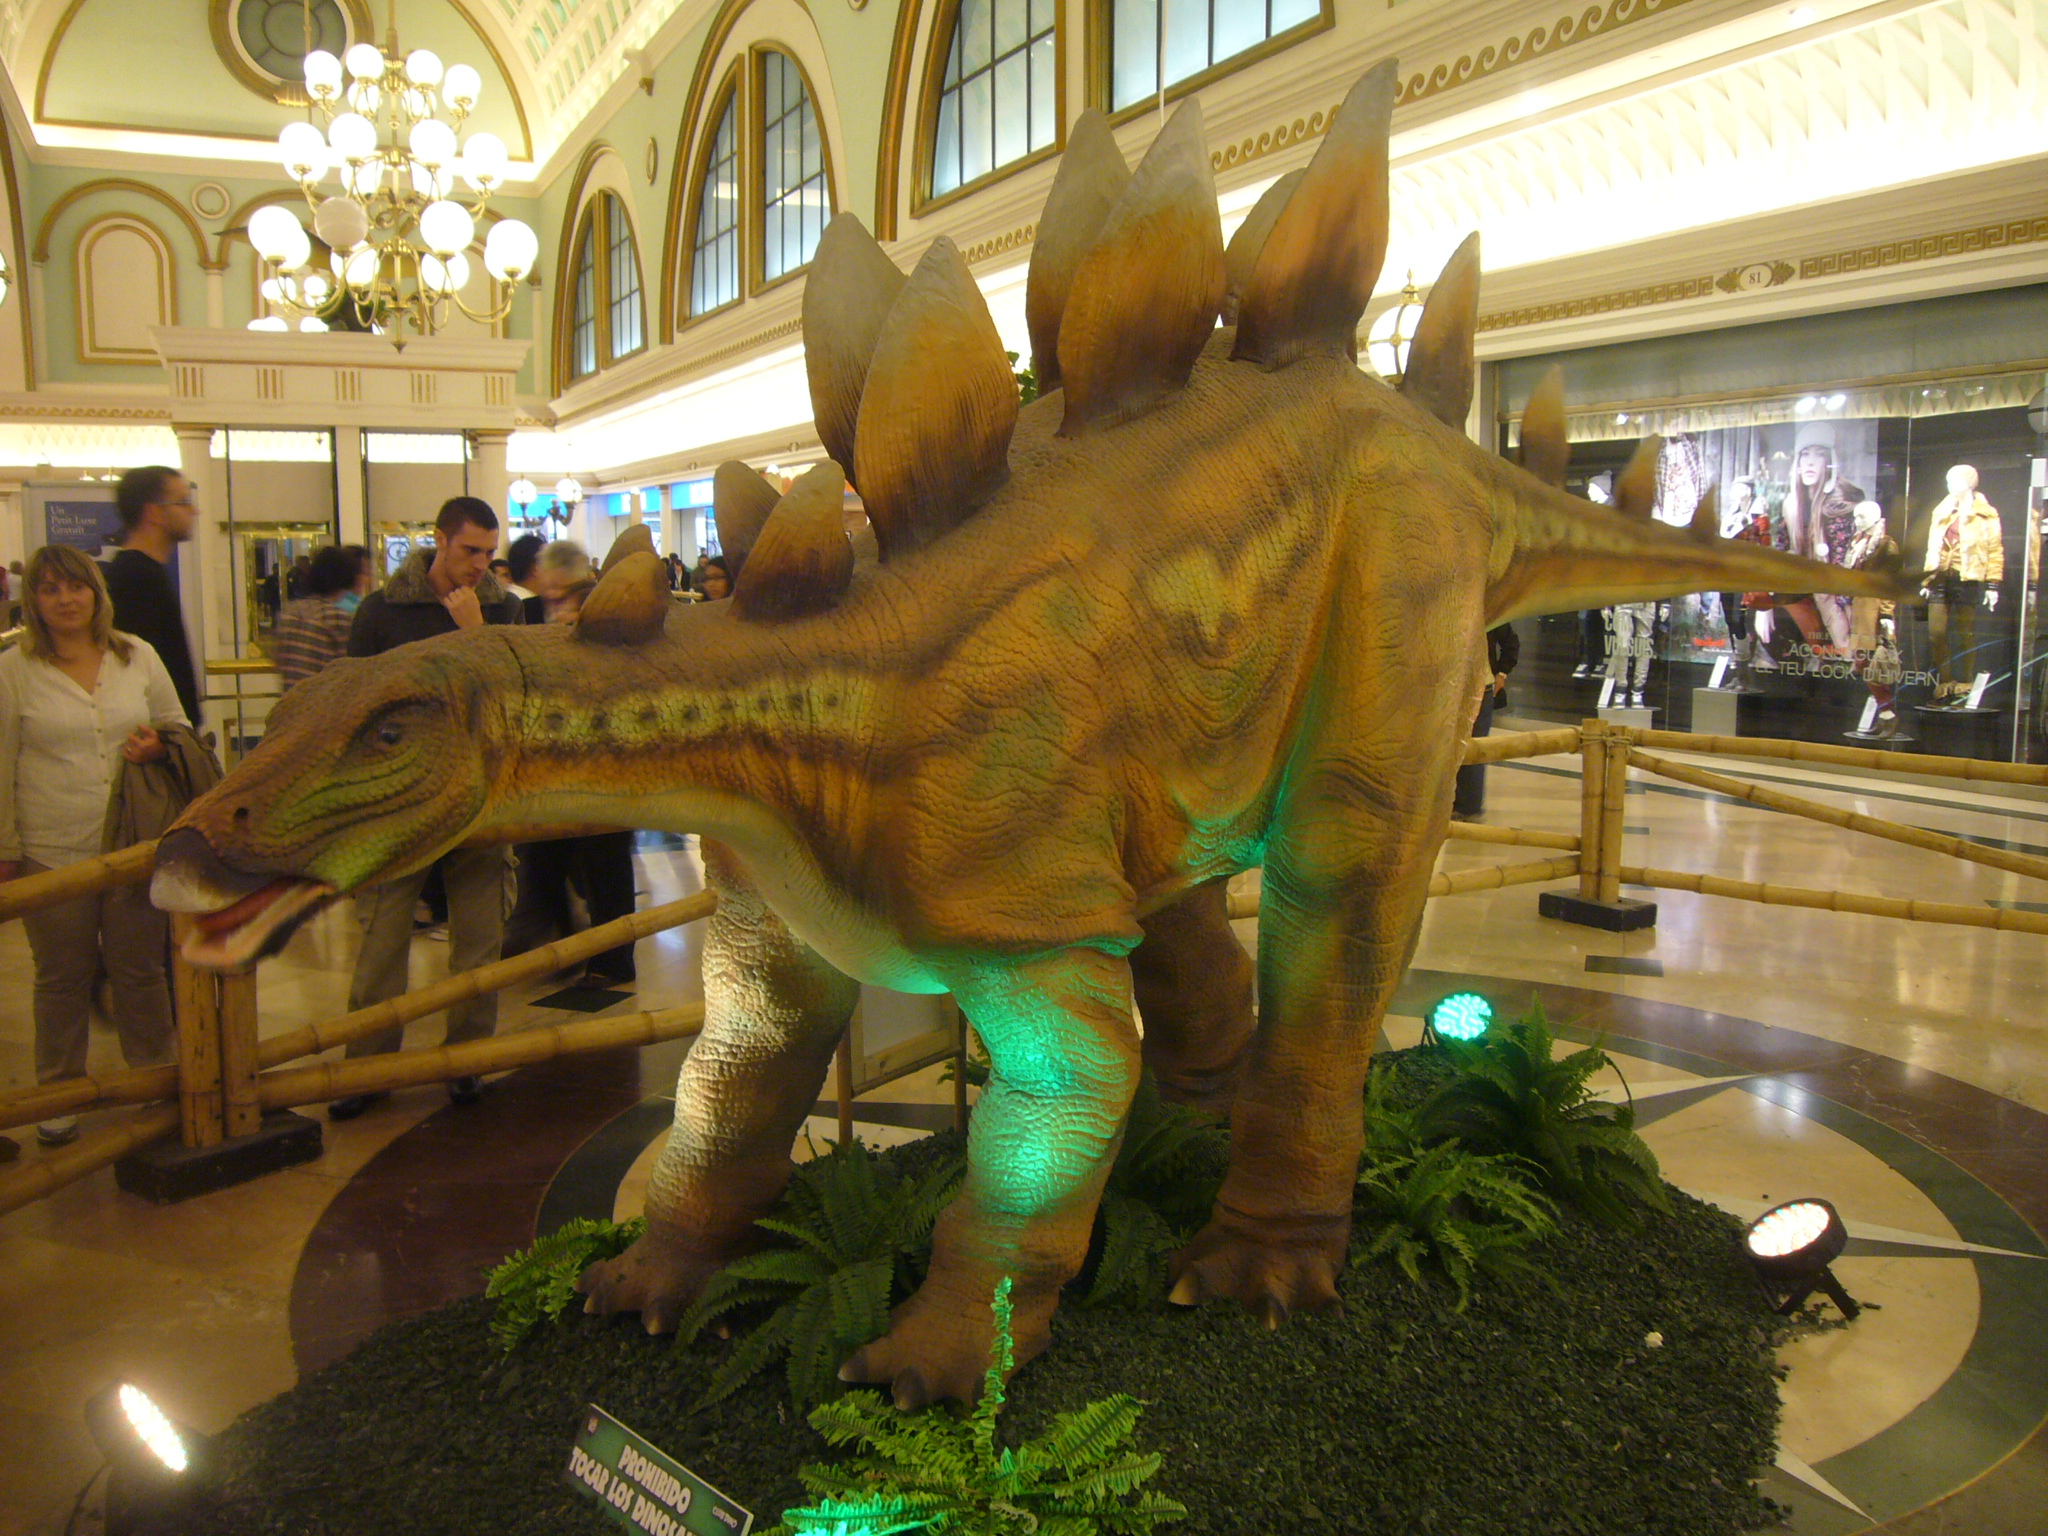 File:Dinosaur replica at Gran Via 2 shopping mall.JPG - Wikimedia Commons